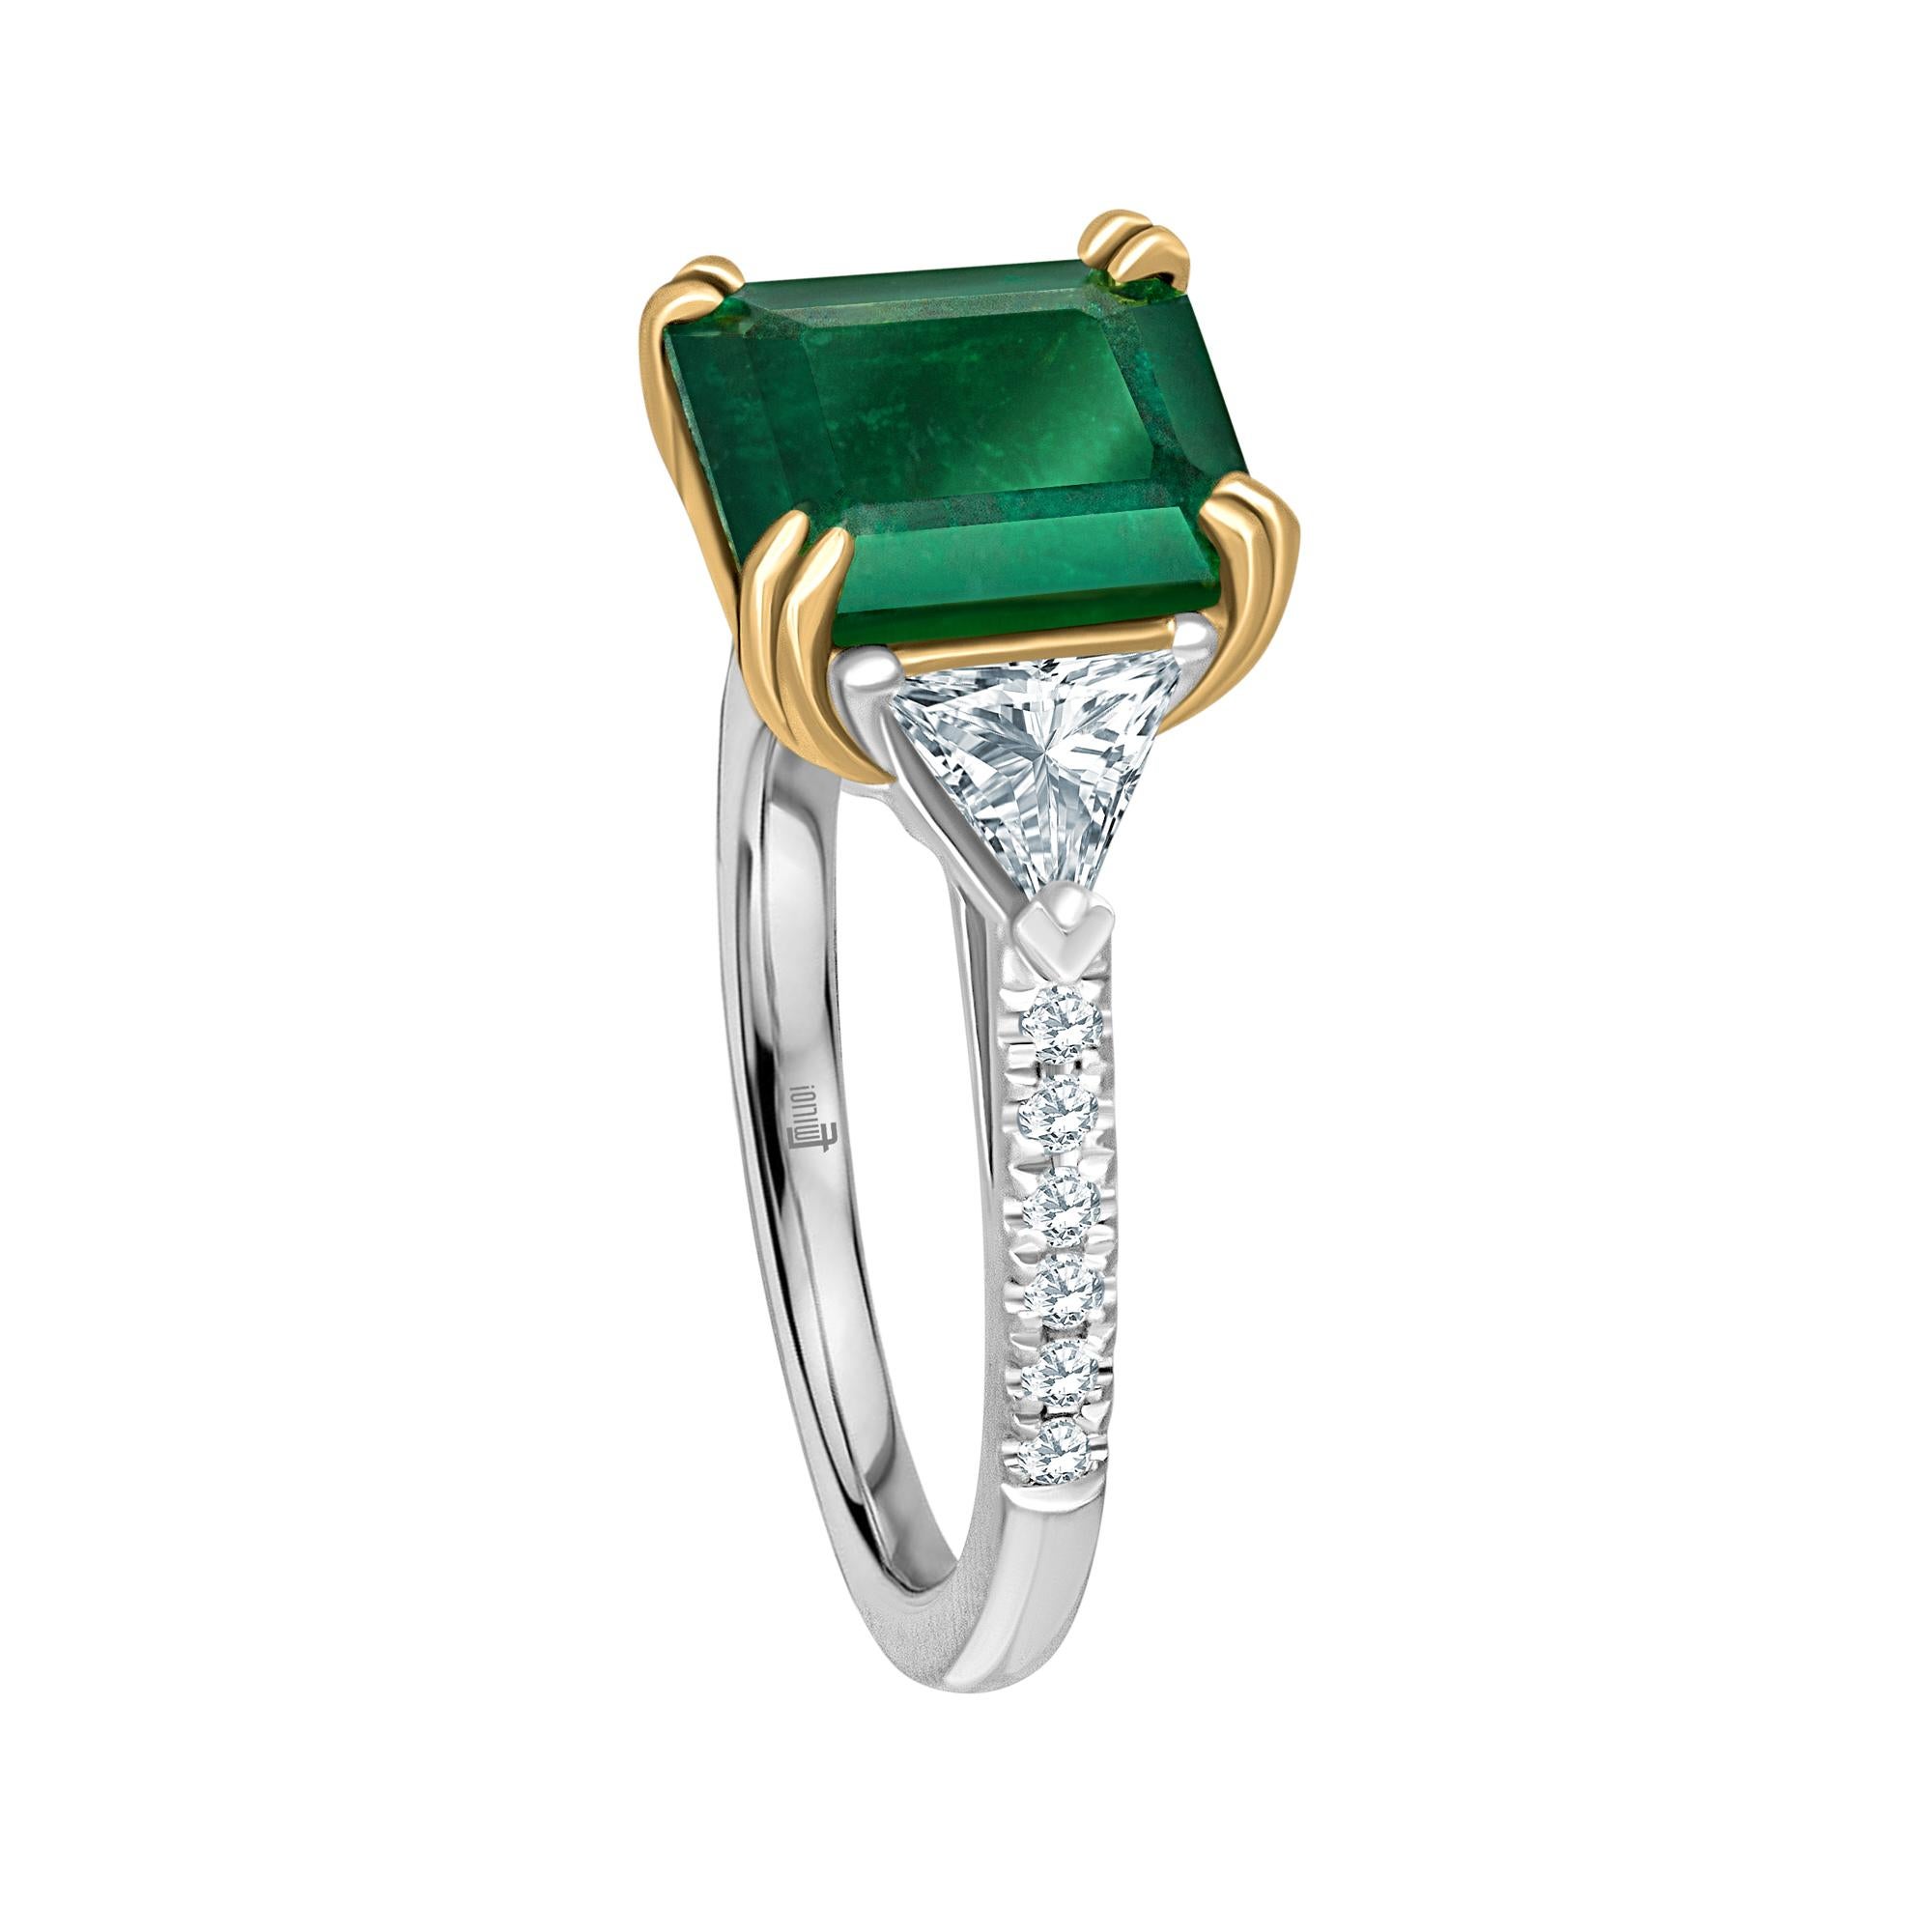 3 carat green emerald ring